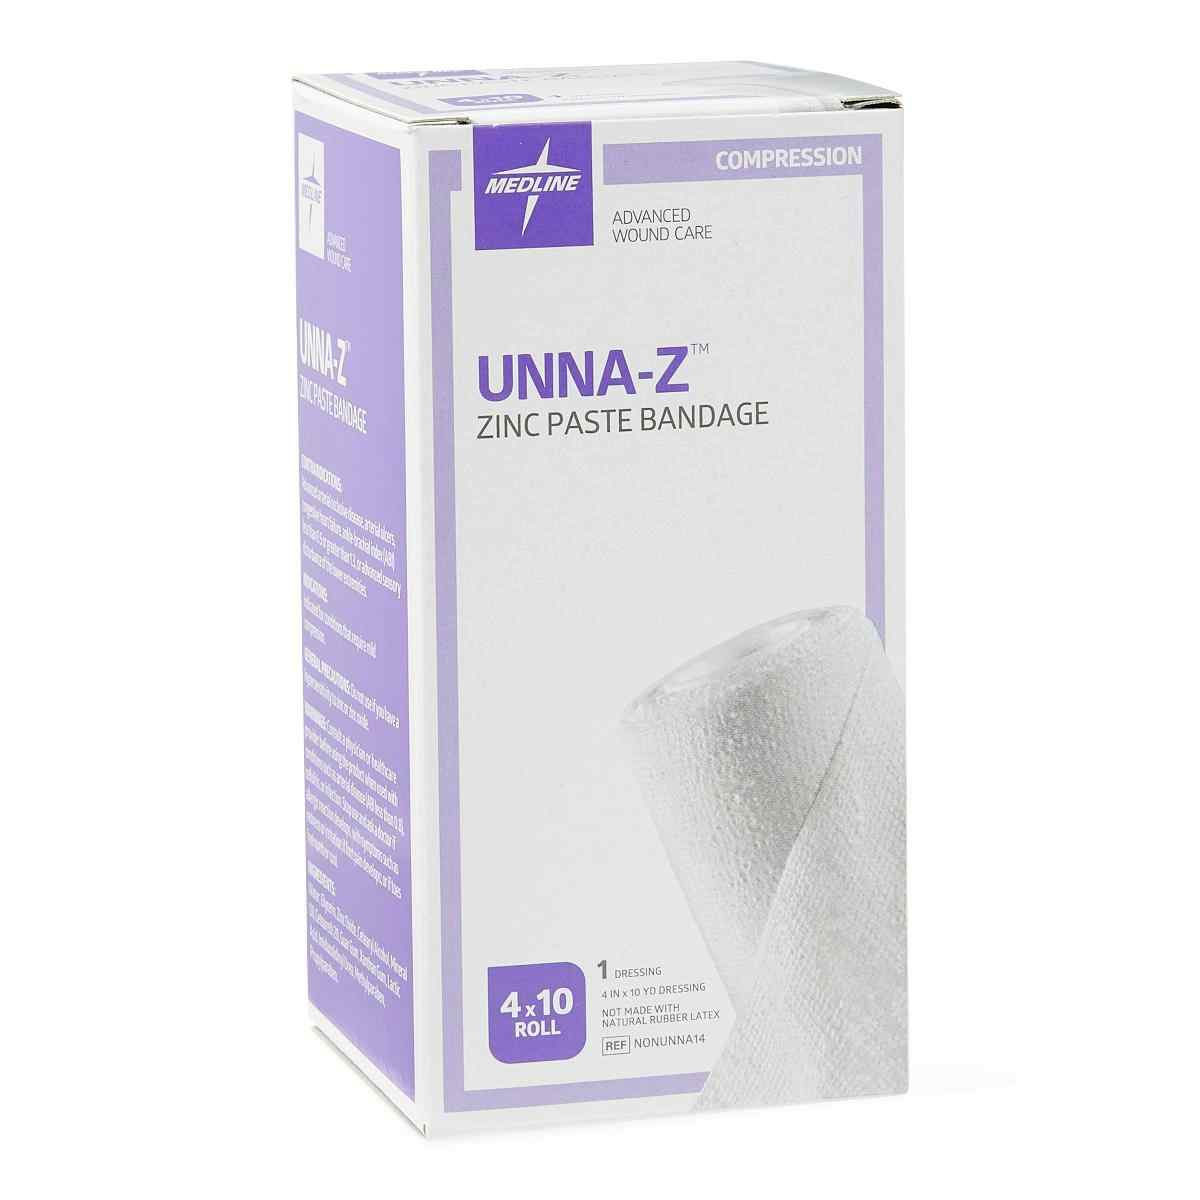 Medline Unna-Z Zinc Oxide Compression Bandage, NONUNNA14H, 4" X 10 yd. - 1 Roll 